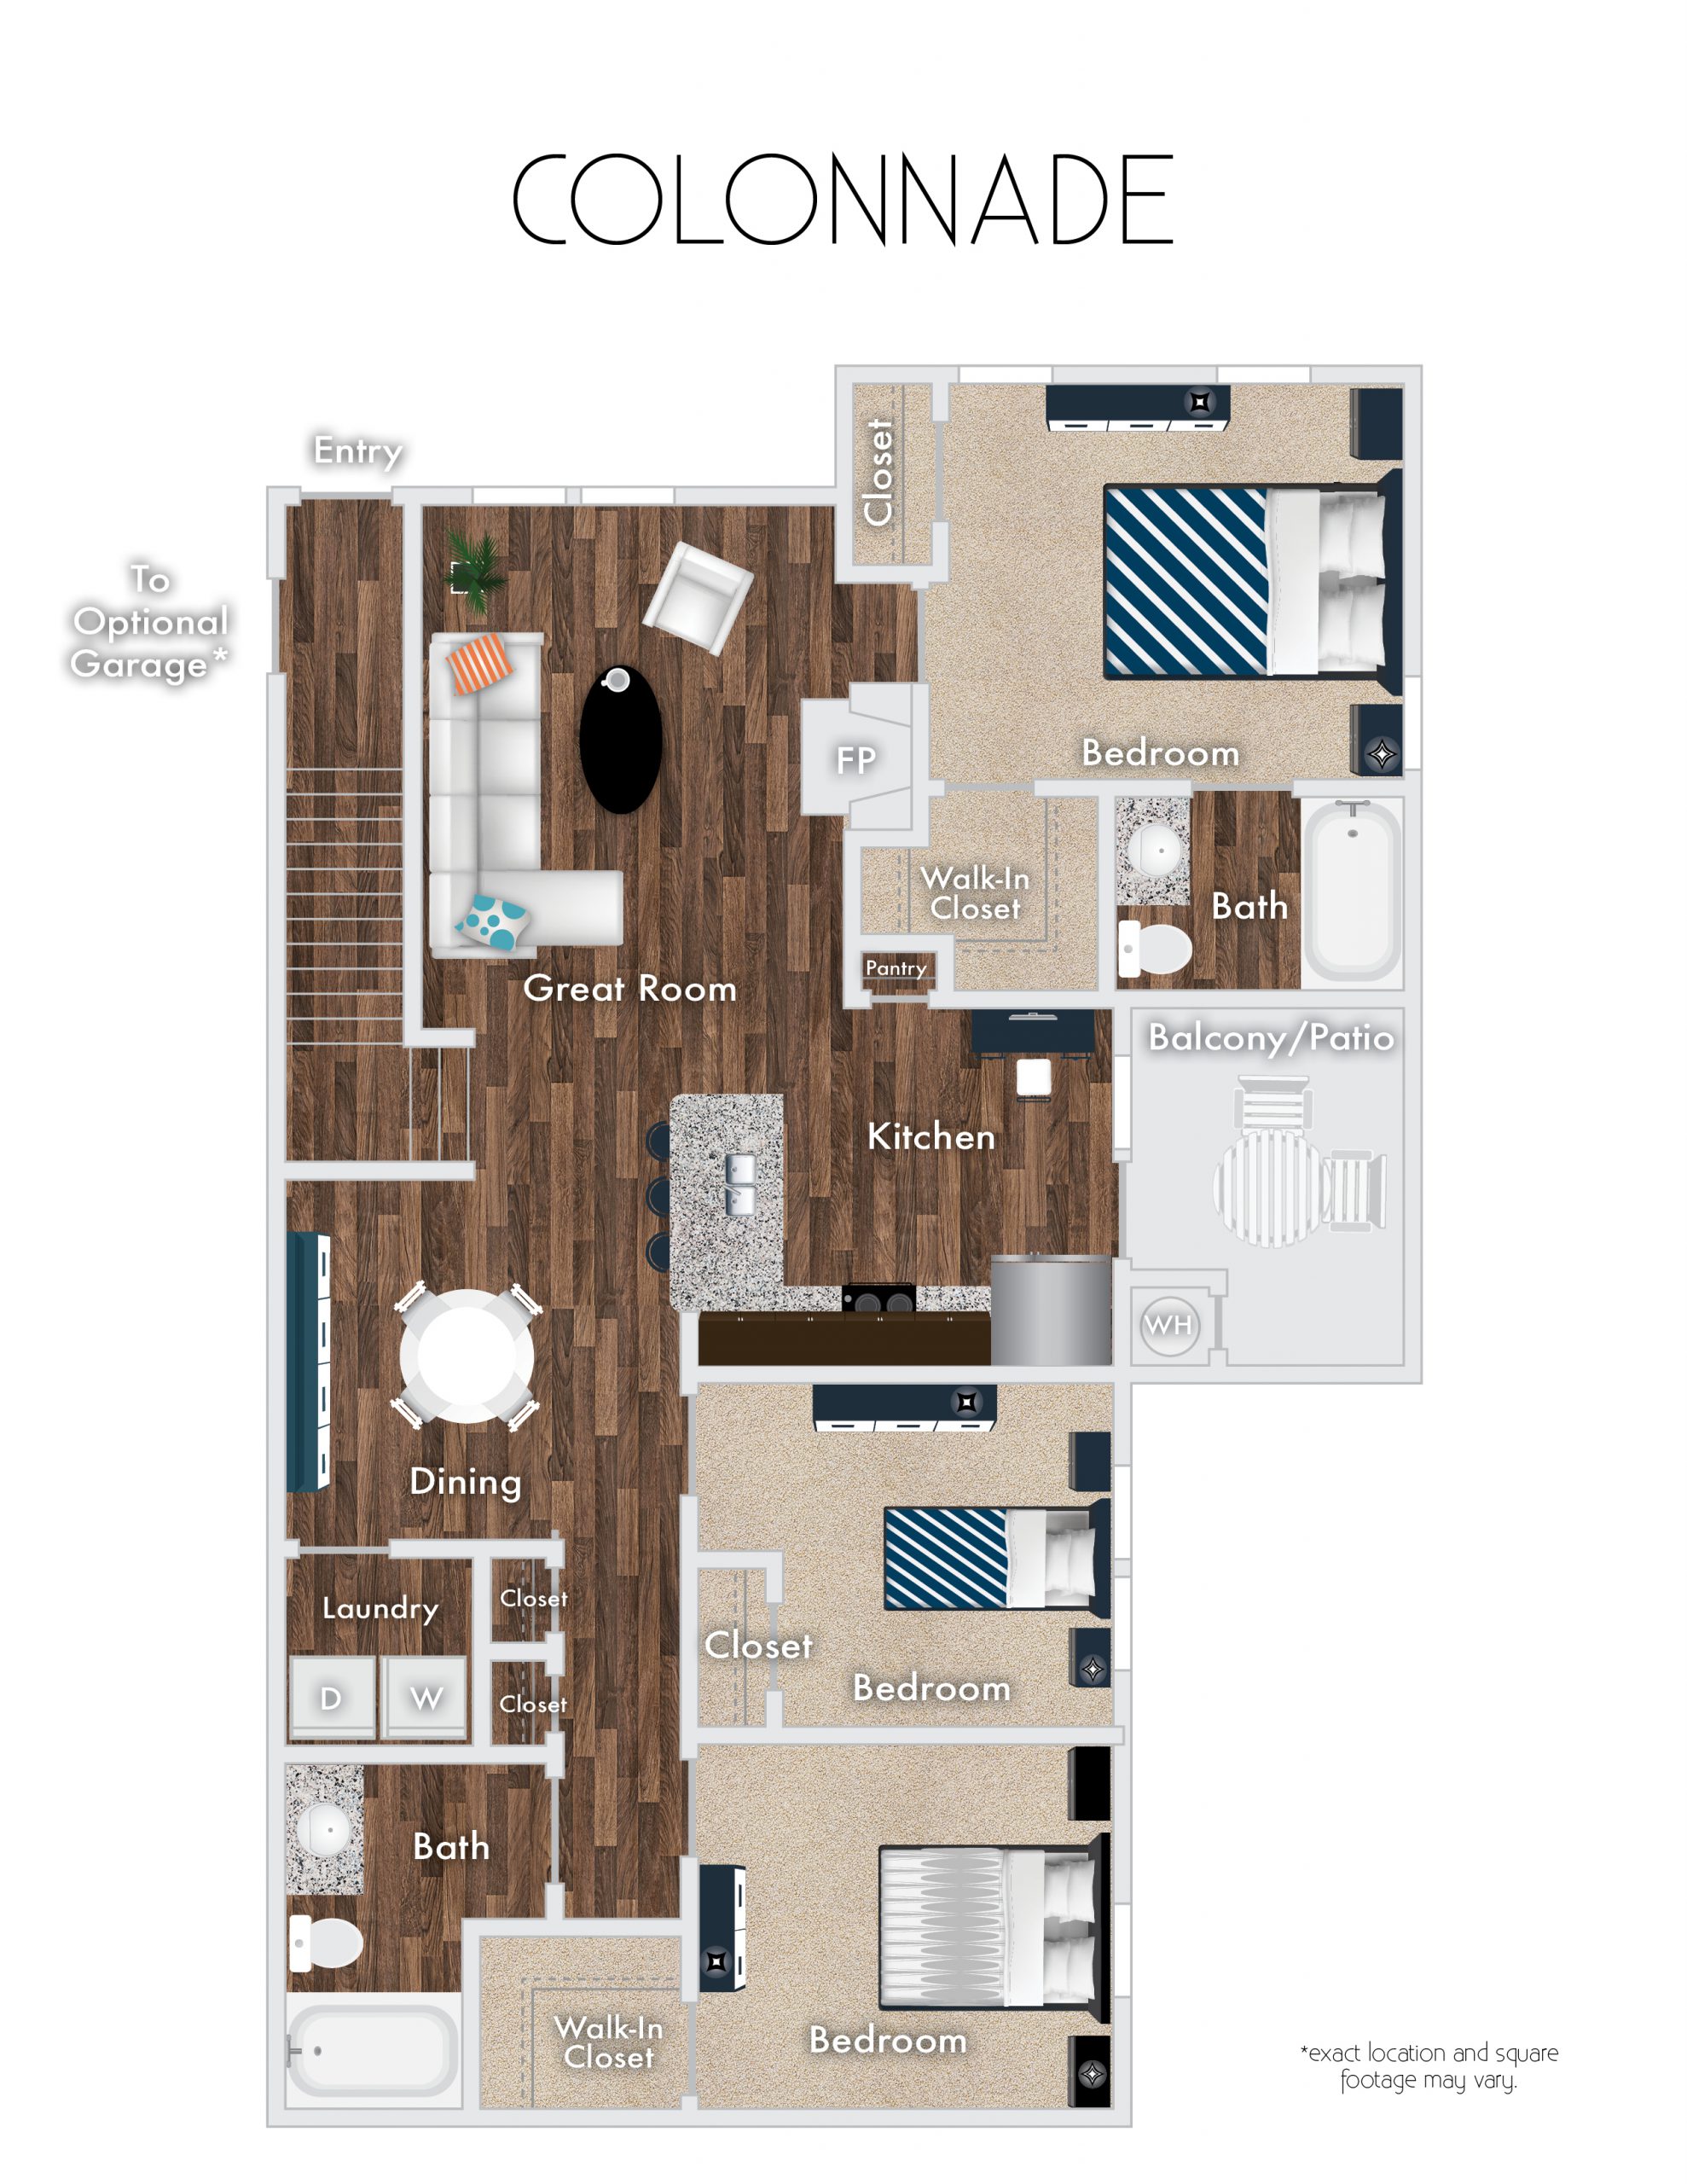 Colonnade floor plan, 3 Bedrooms, 2 Baths with optional garage.